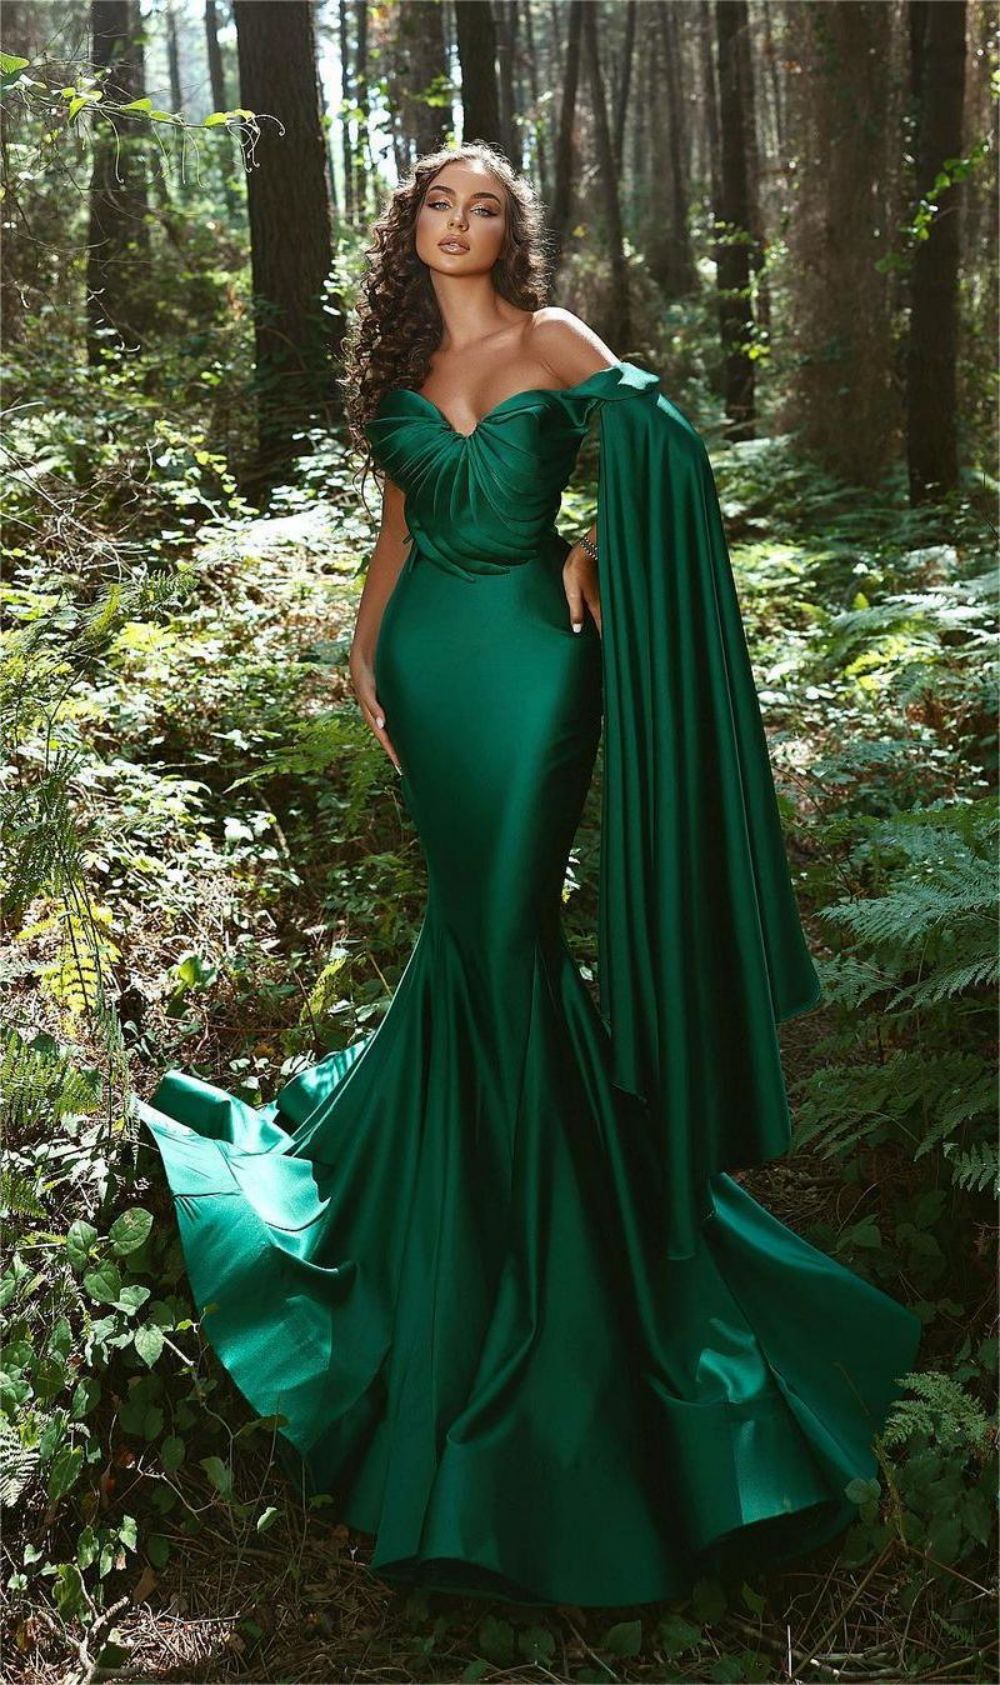 Details more than 144 emerald green satin dress super hot ...